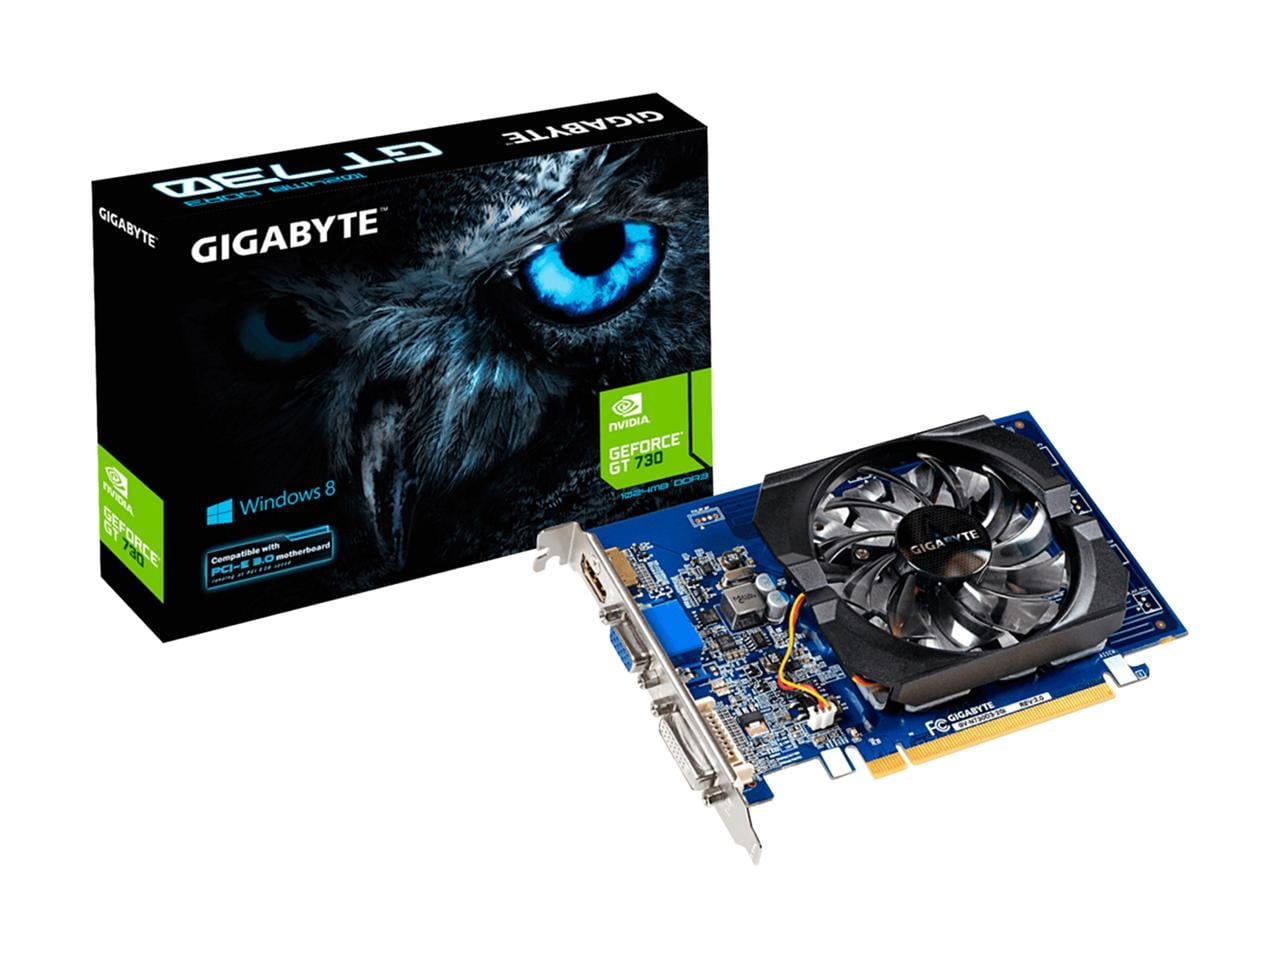 Gigabyte GeForce GT 730 Graphics Card GV-N730-2GI B&H Photo Video